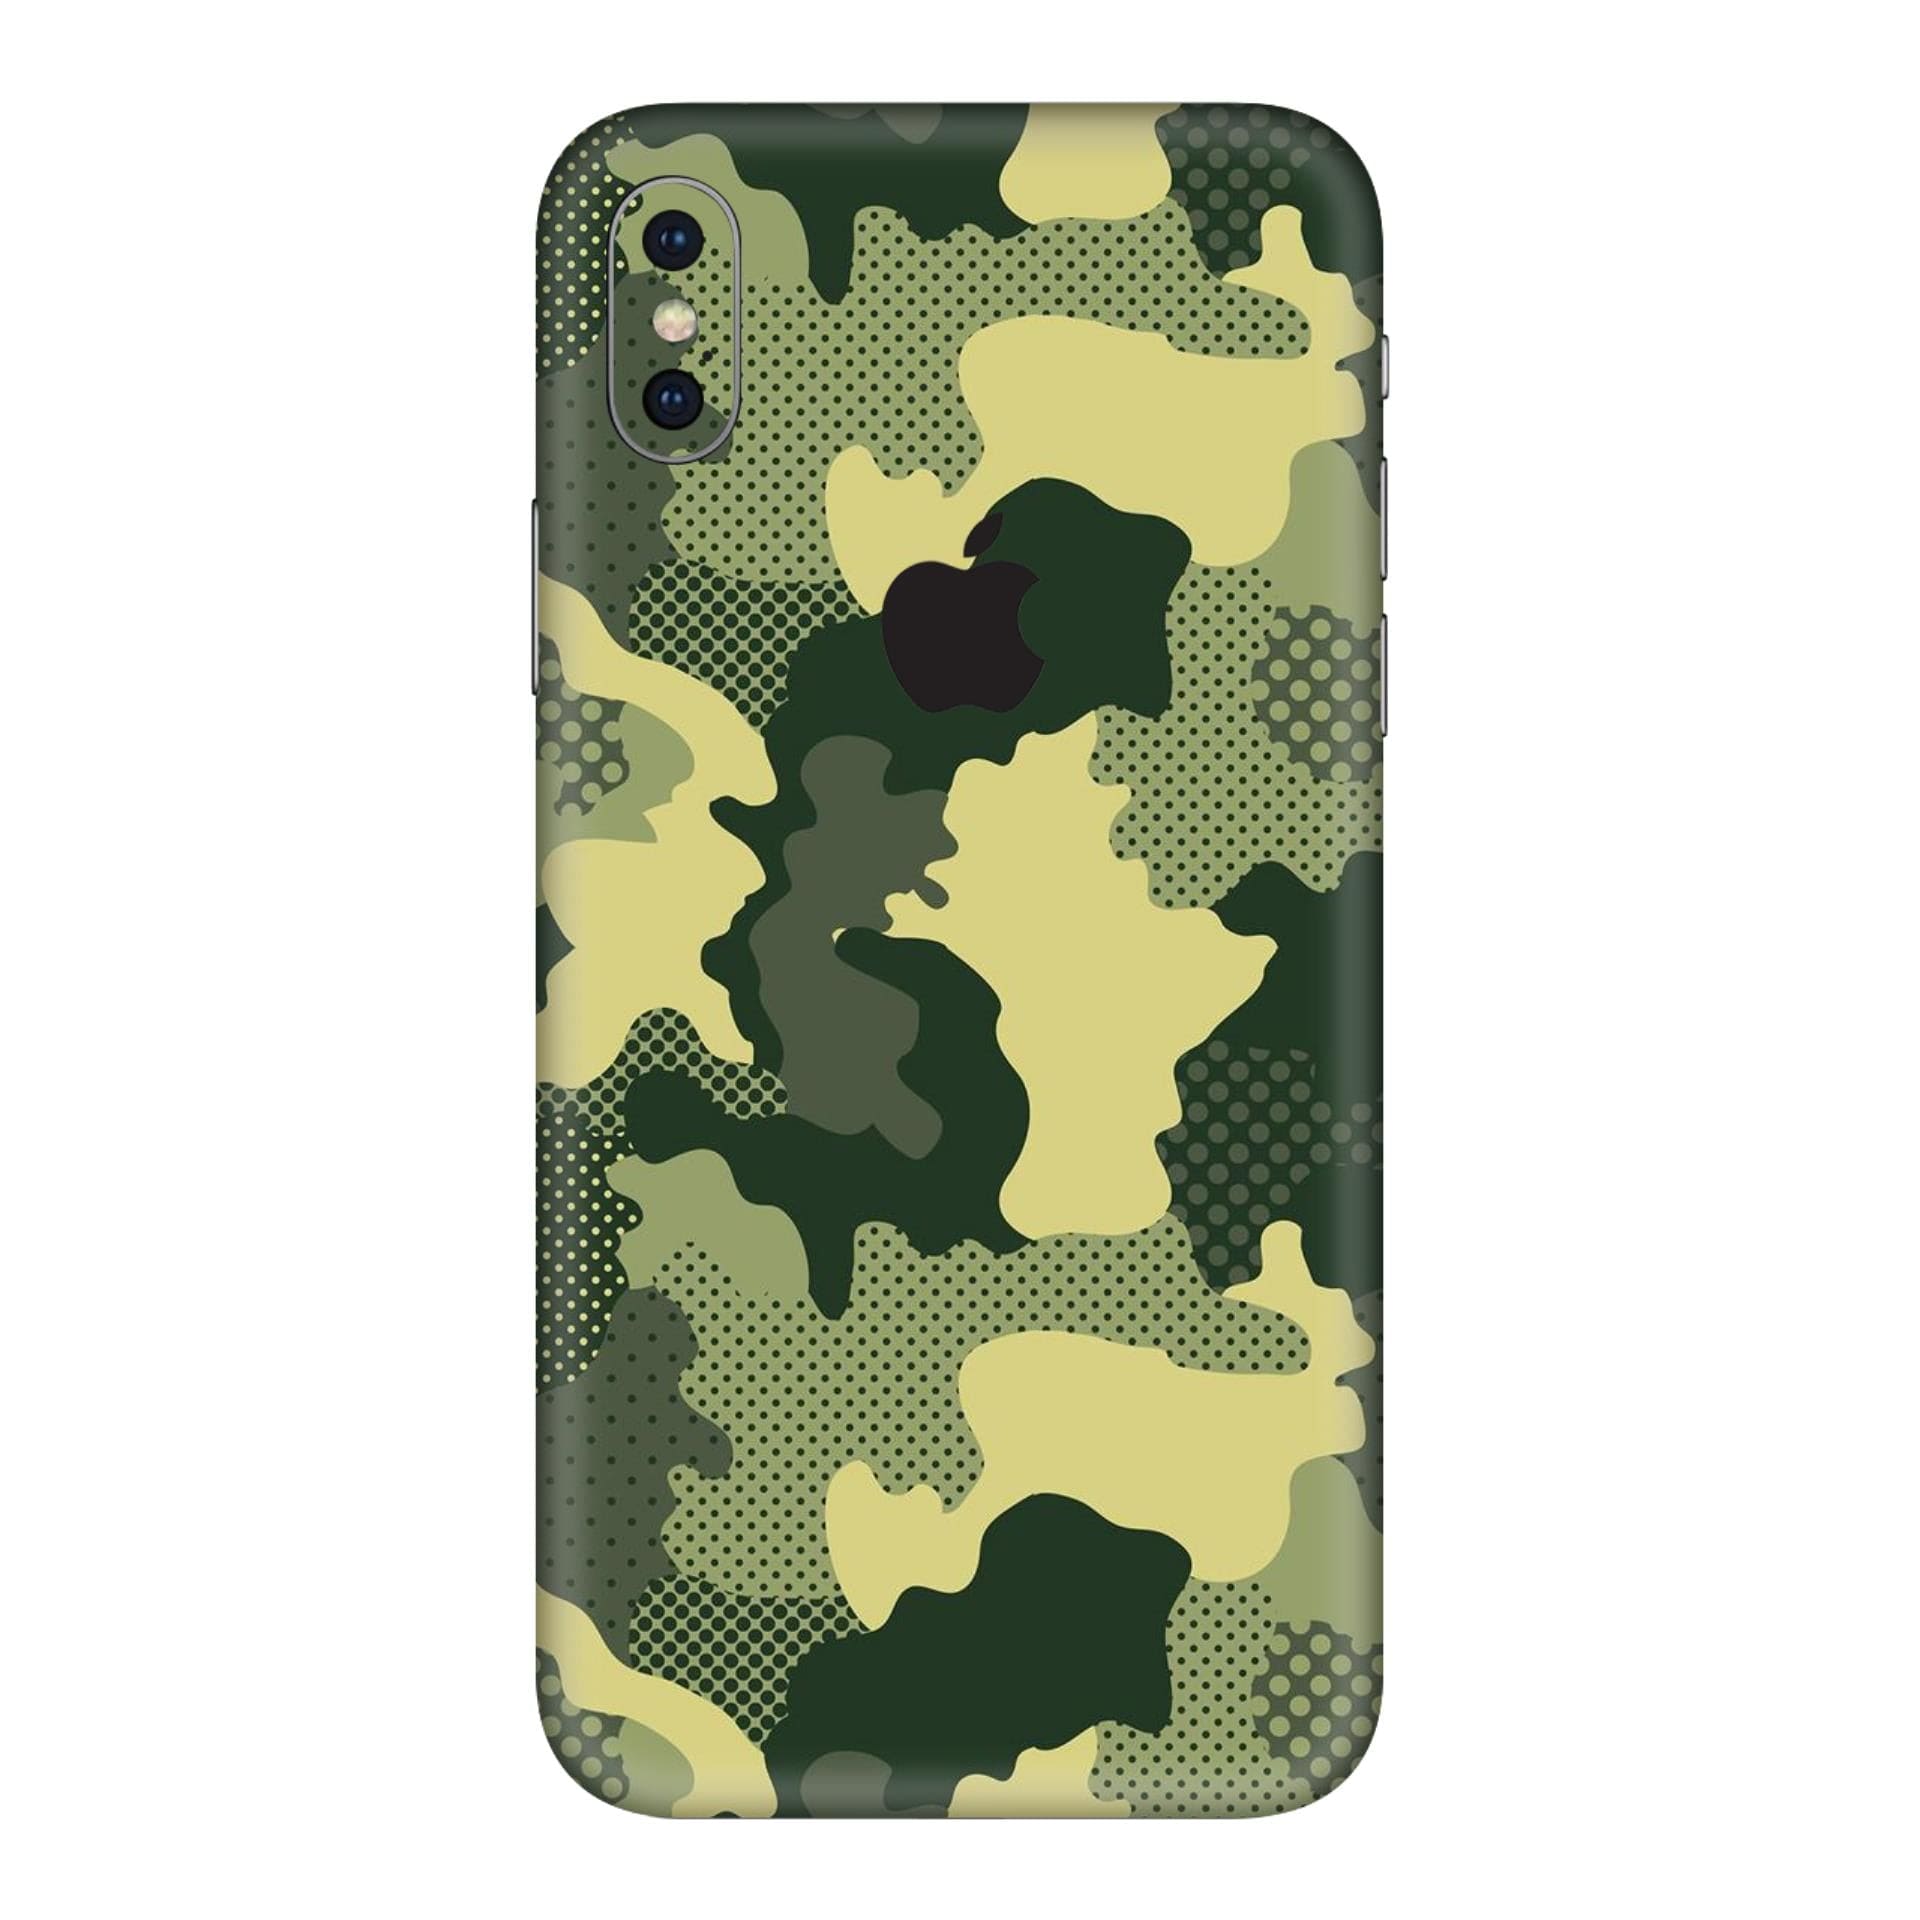 iphone XS Max Military Green Camo skins